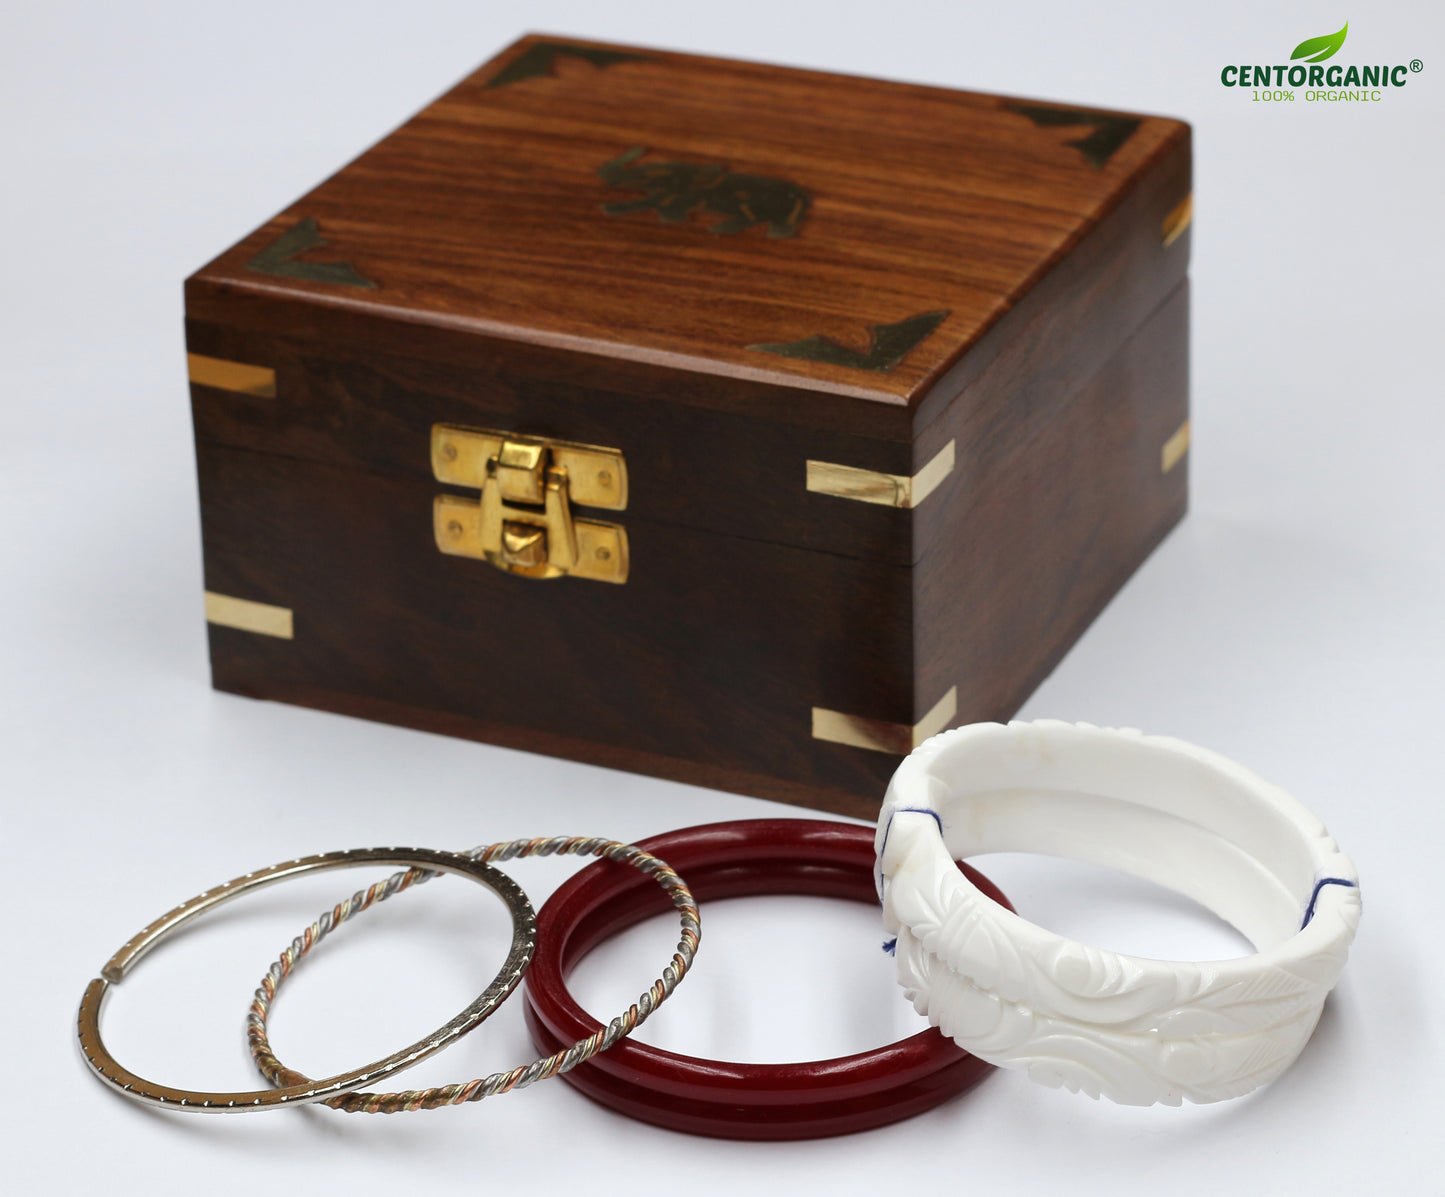 Centorganic Chura sankha pola bangles for women, 1 pair of sankha, 1 pair of red pola, 2 iron noa, with free wooden jewellery box. (Design code: CSBM05)